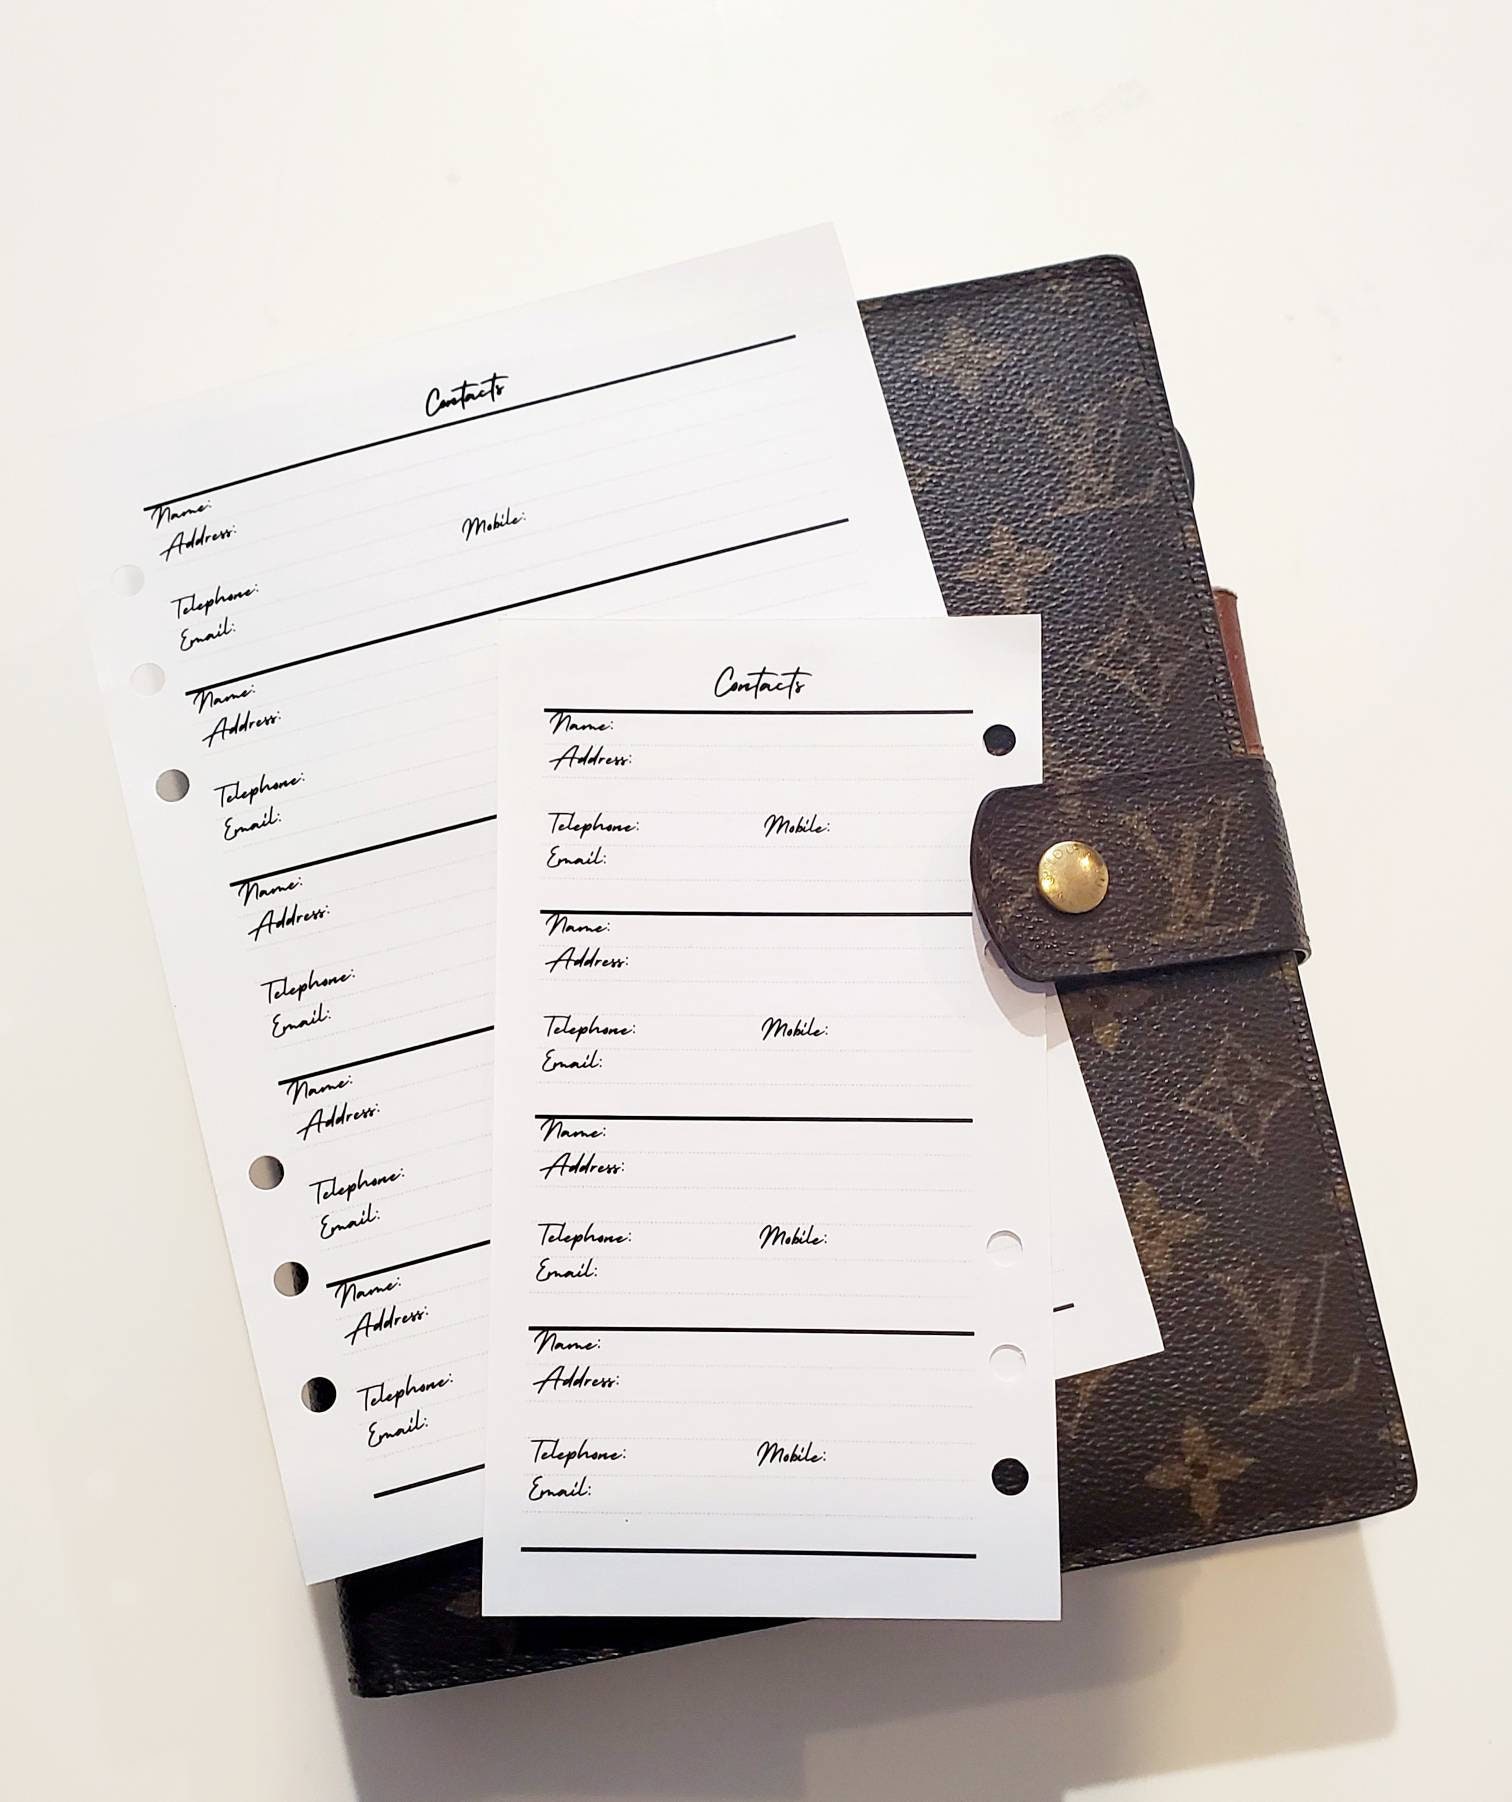 Louis Vuitton Agenda Setup & Flip Through - The Luxe Minimalist